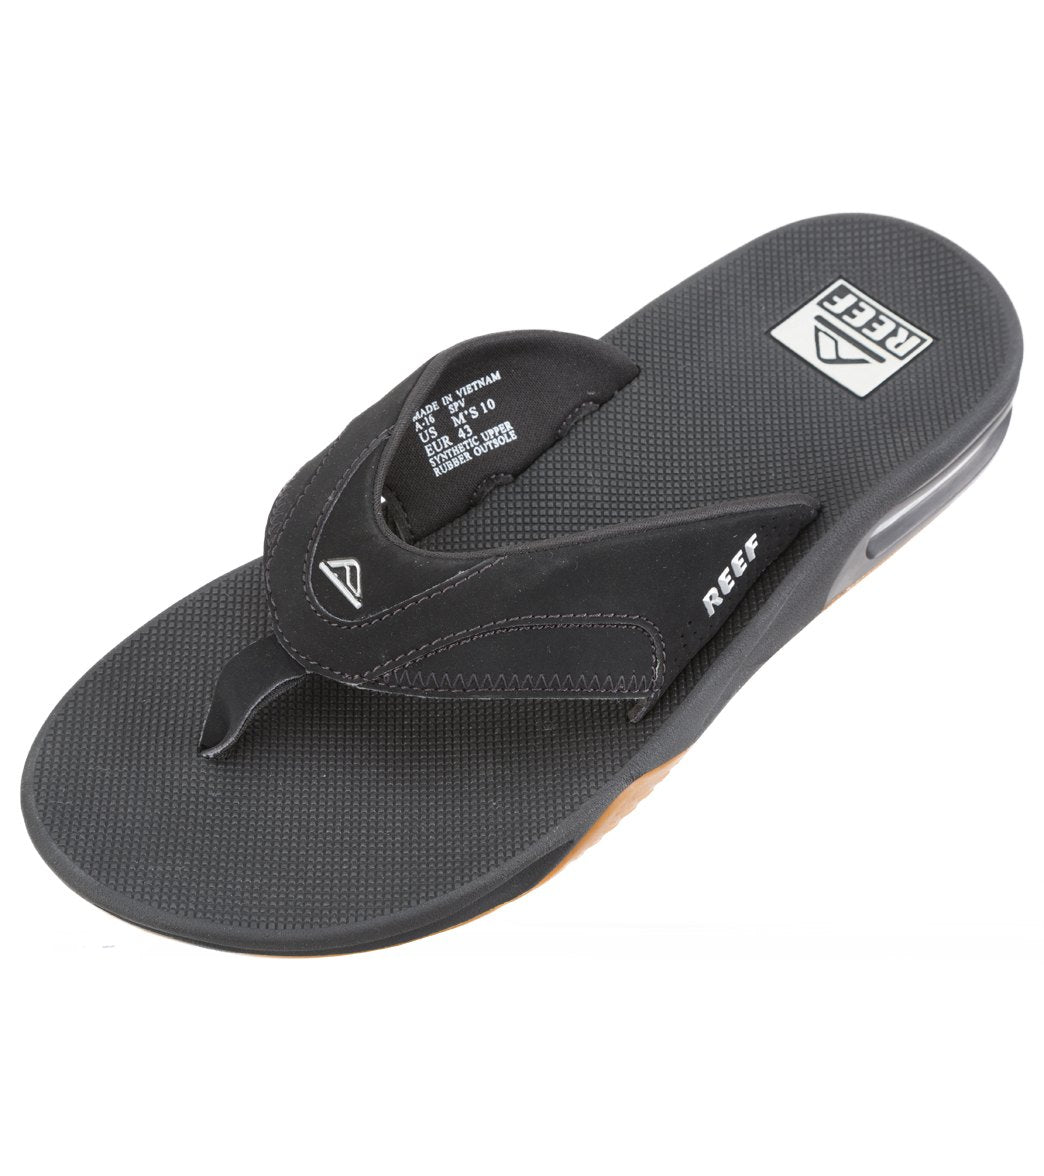 Reef Men's Fanning Sandals - Black/Silver 7 Leather/Rubber - Swimoutlet.com